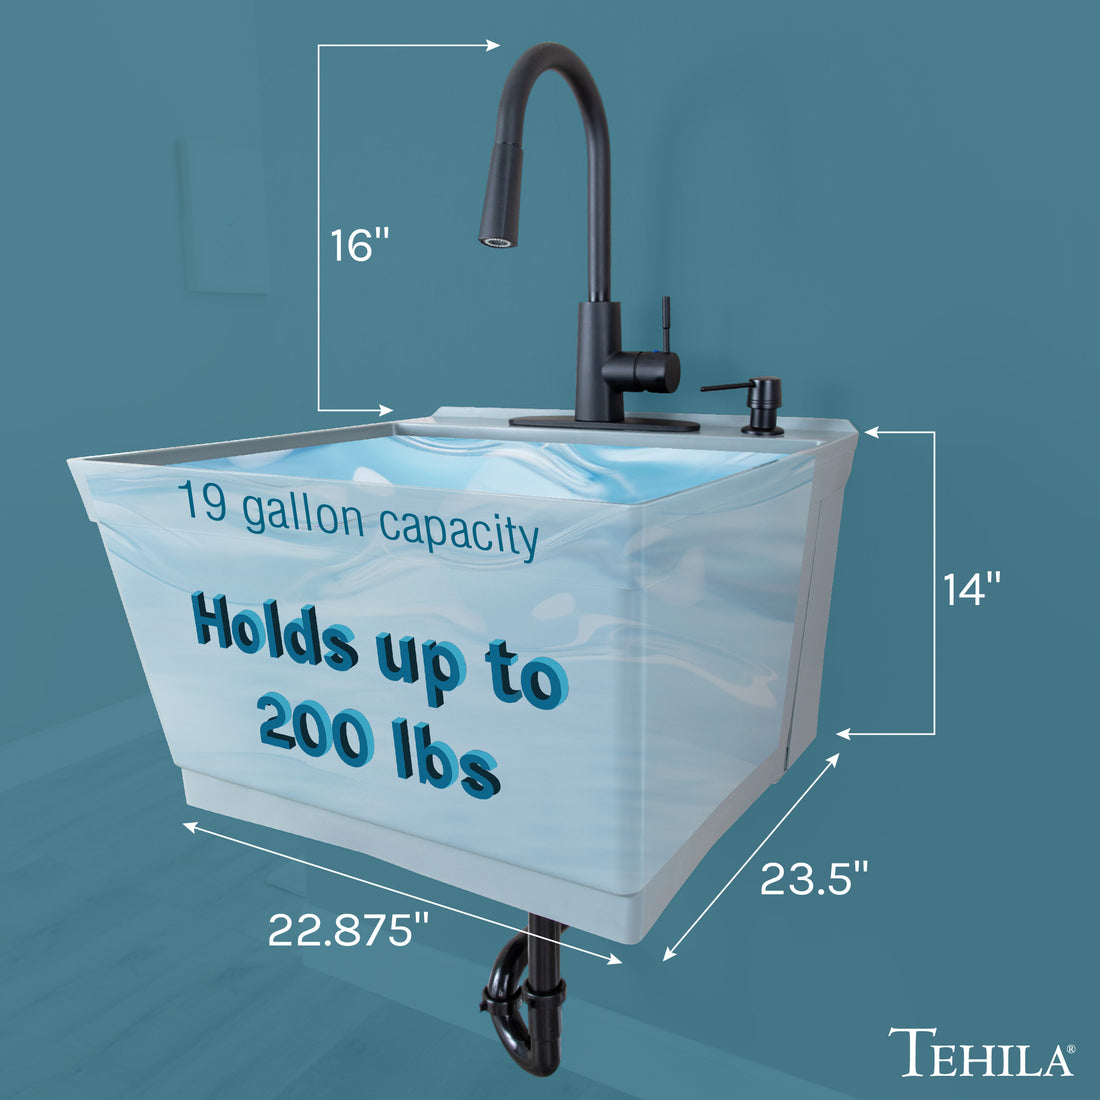 Tehila Standard Wall-Mounted Grey Utility Sink with Black Finish Pull-Down Faucet - Utility sinks vanites Tehila